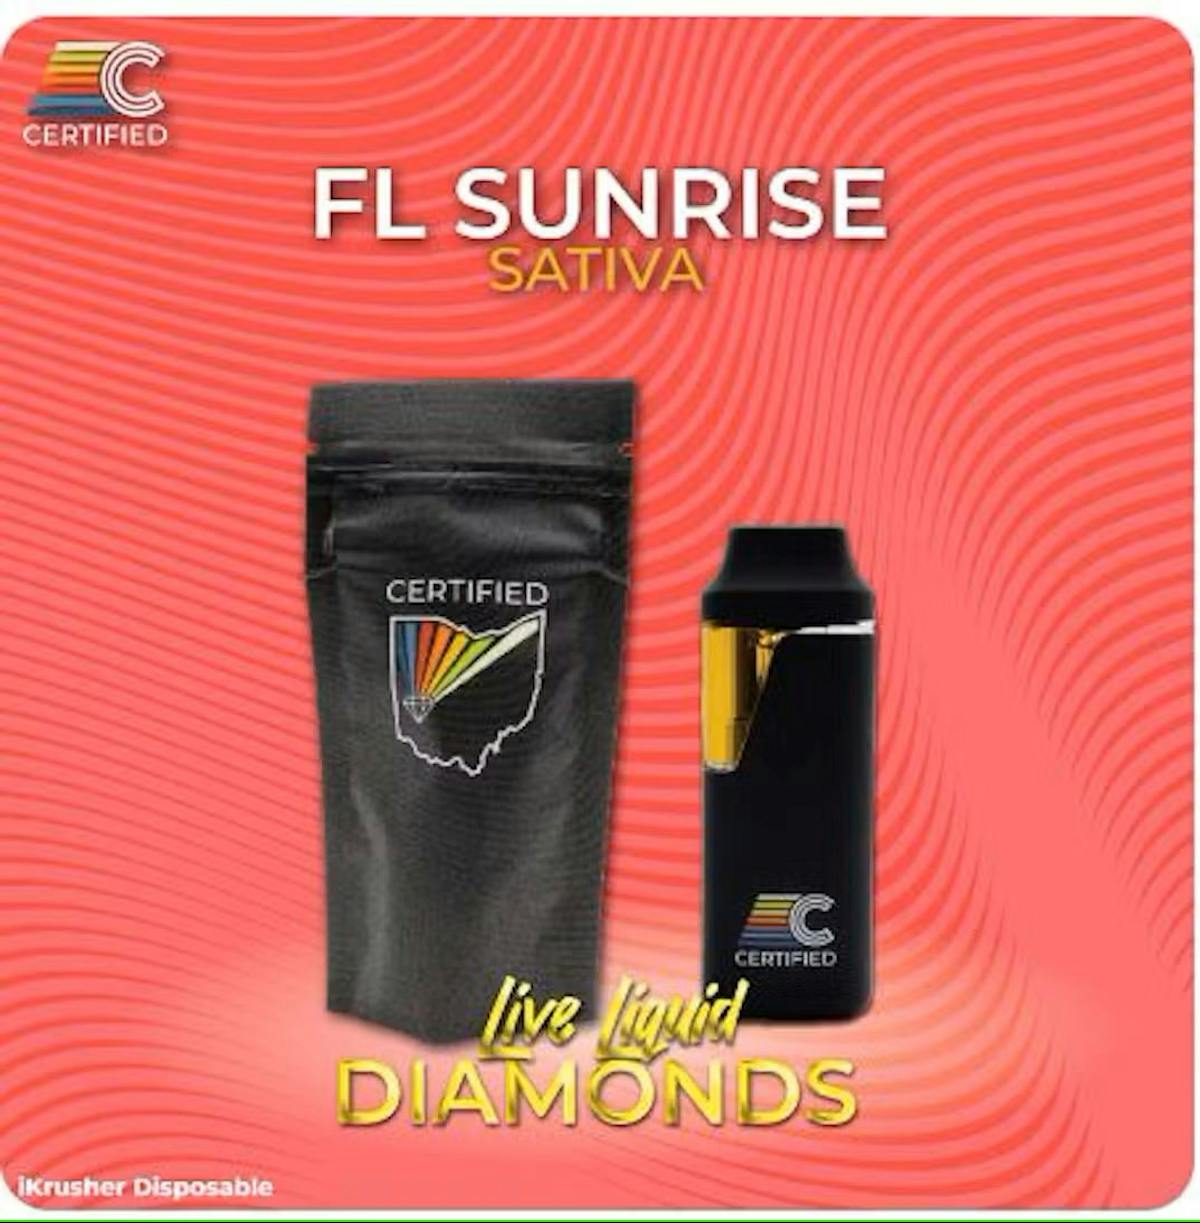 image of FL Sunrise Live Liquid Diamonds iKrusher Disposable